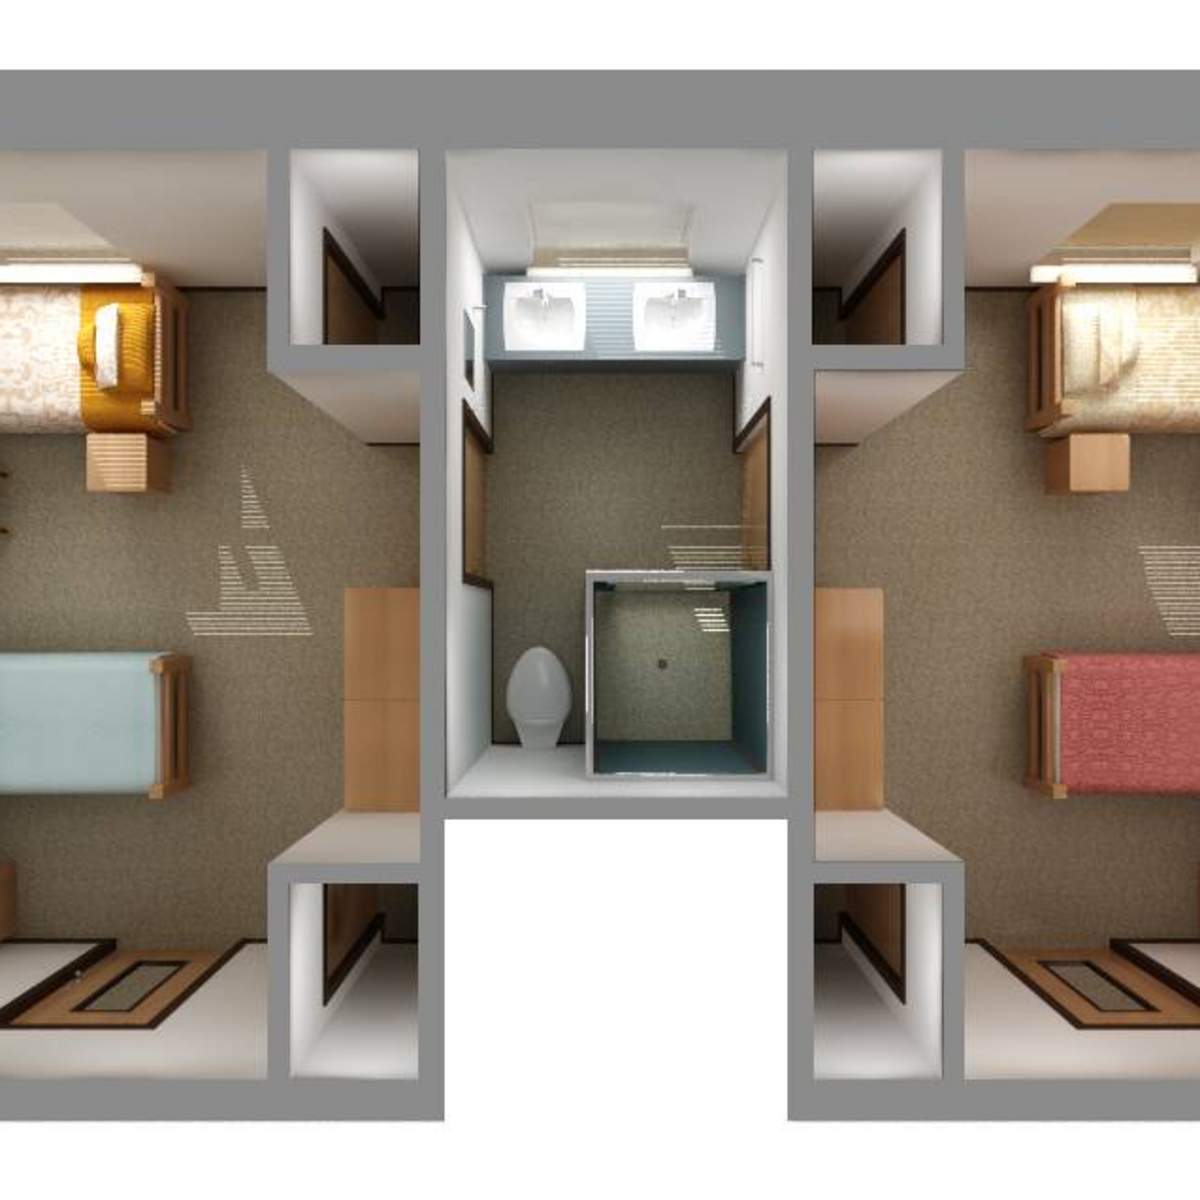 Bexar Hall suite layout